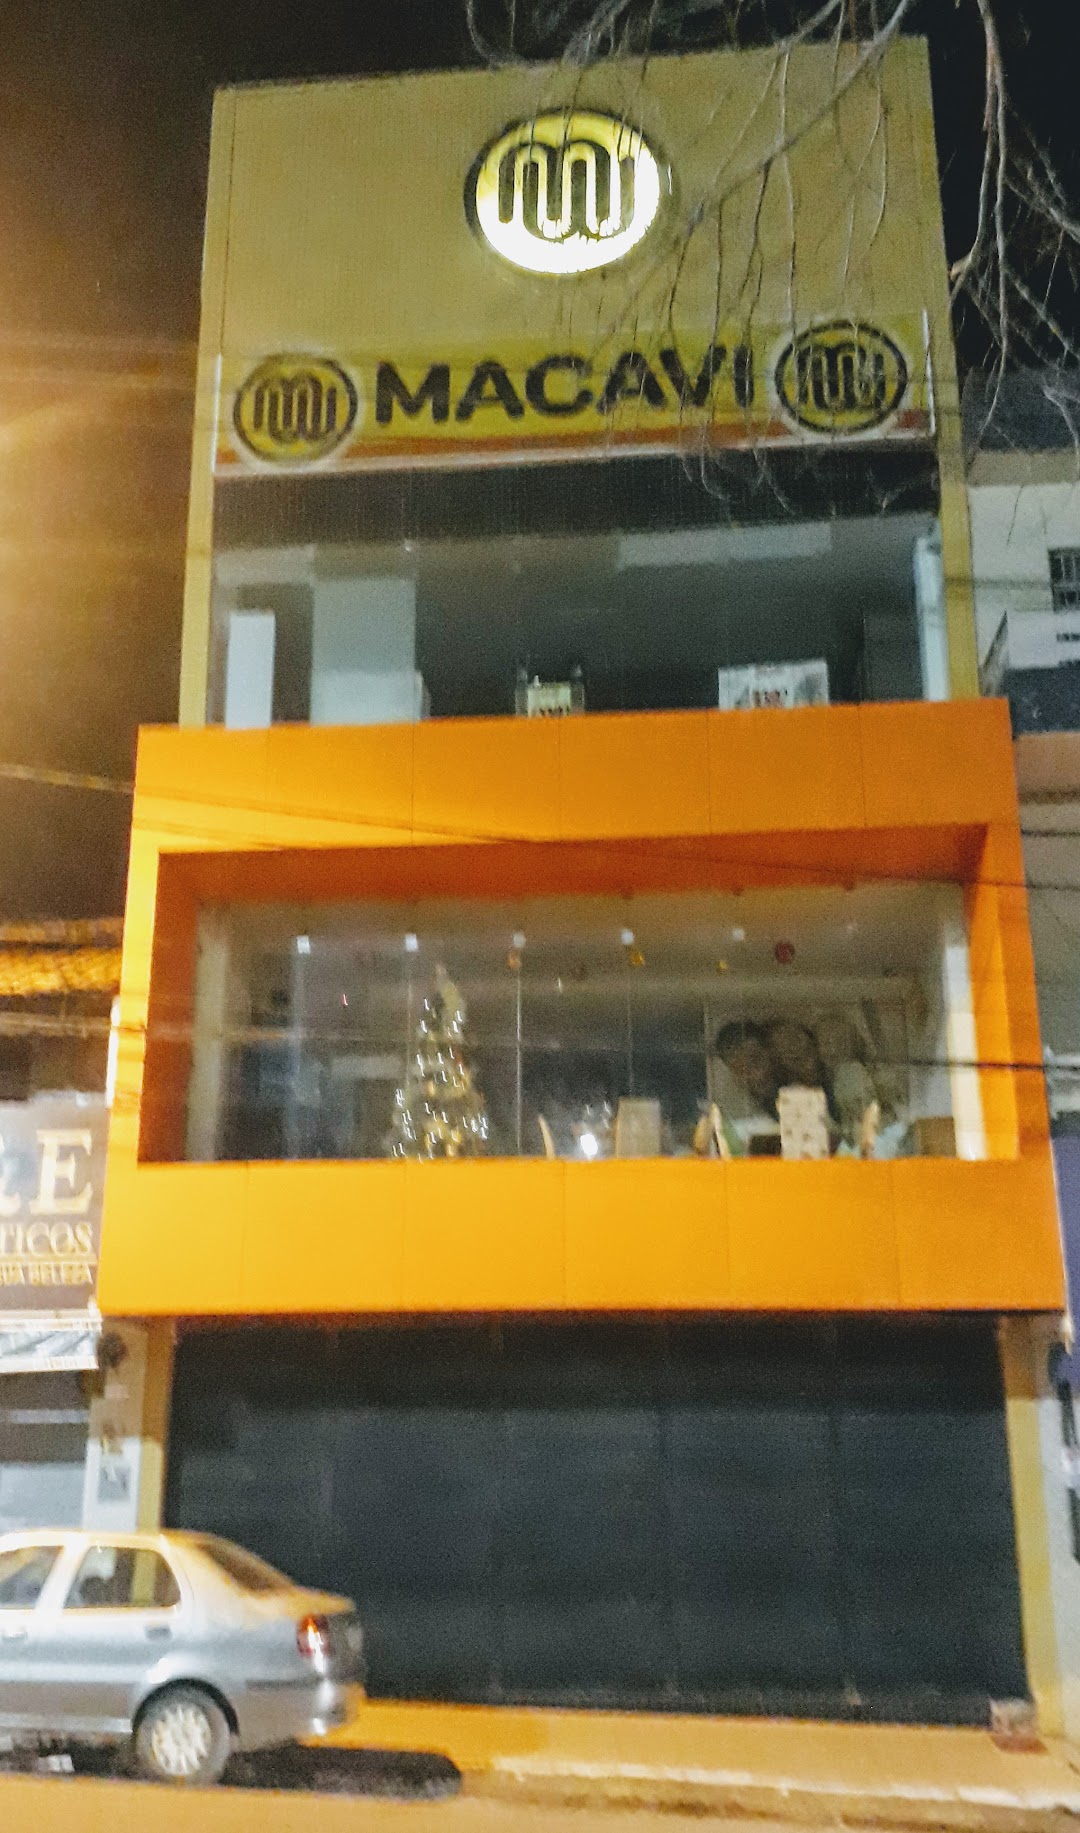 Macavi